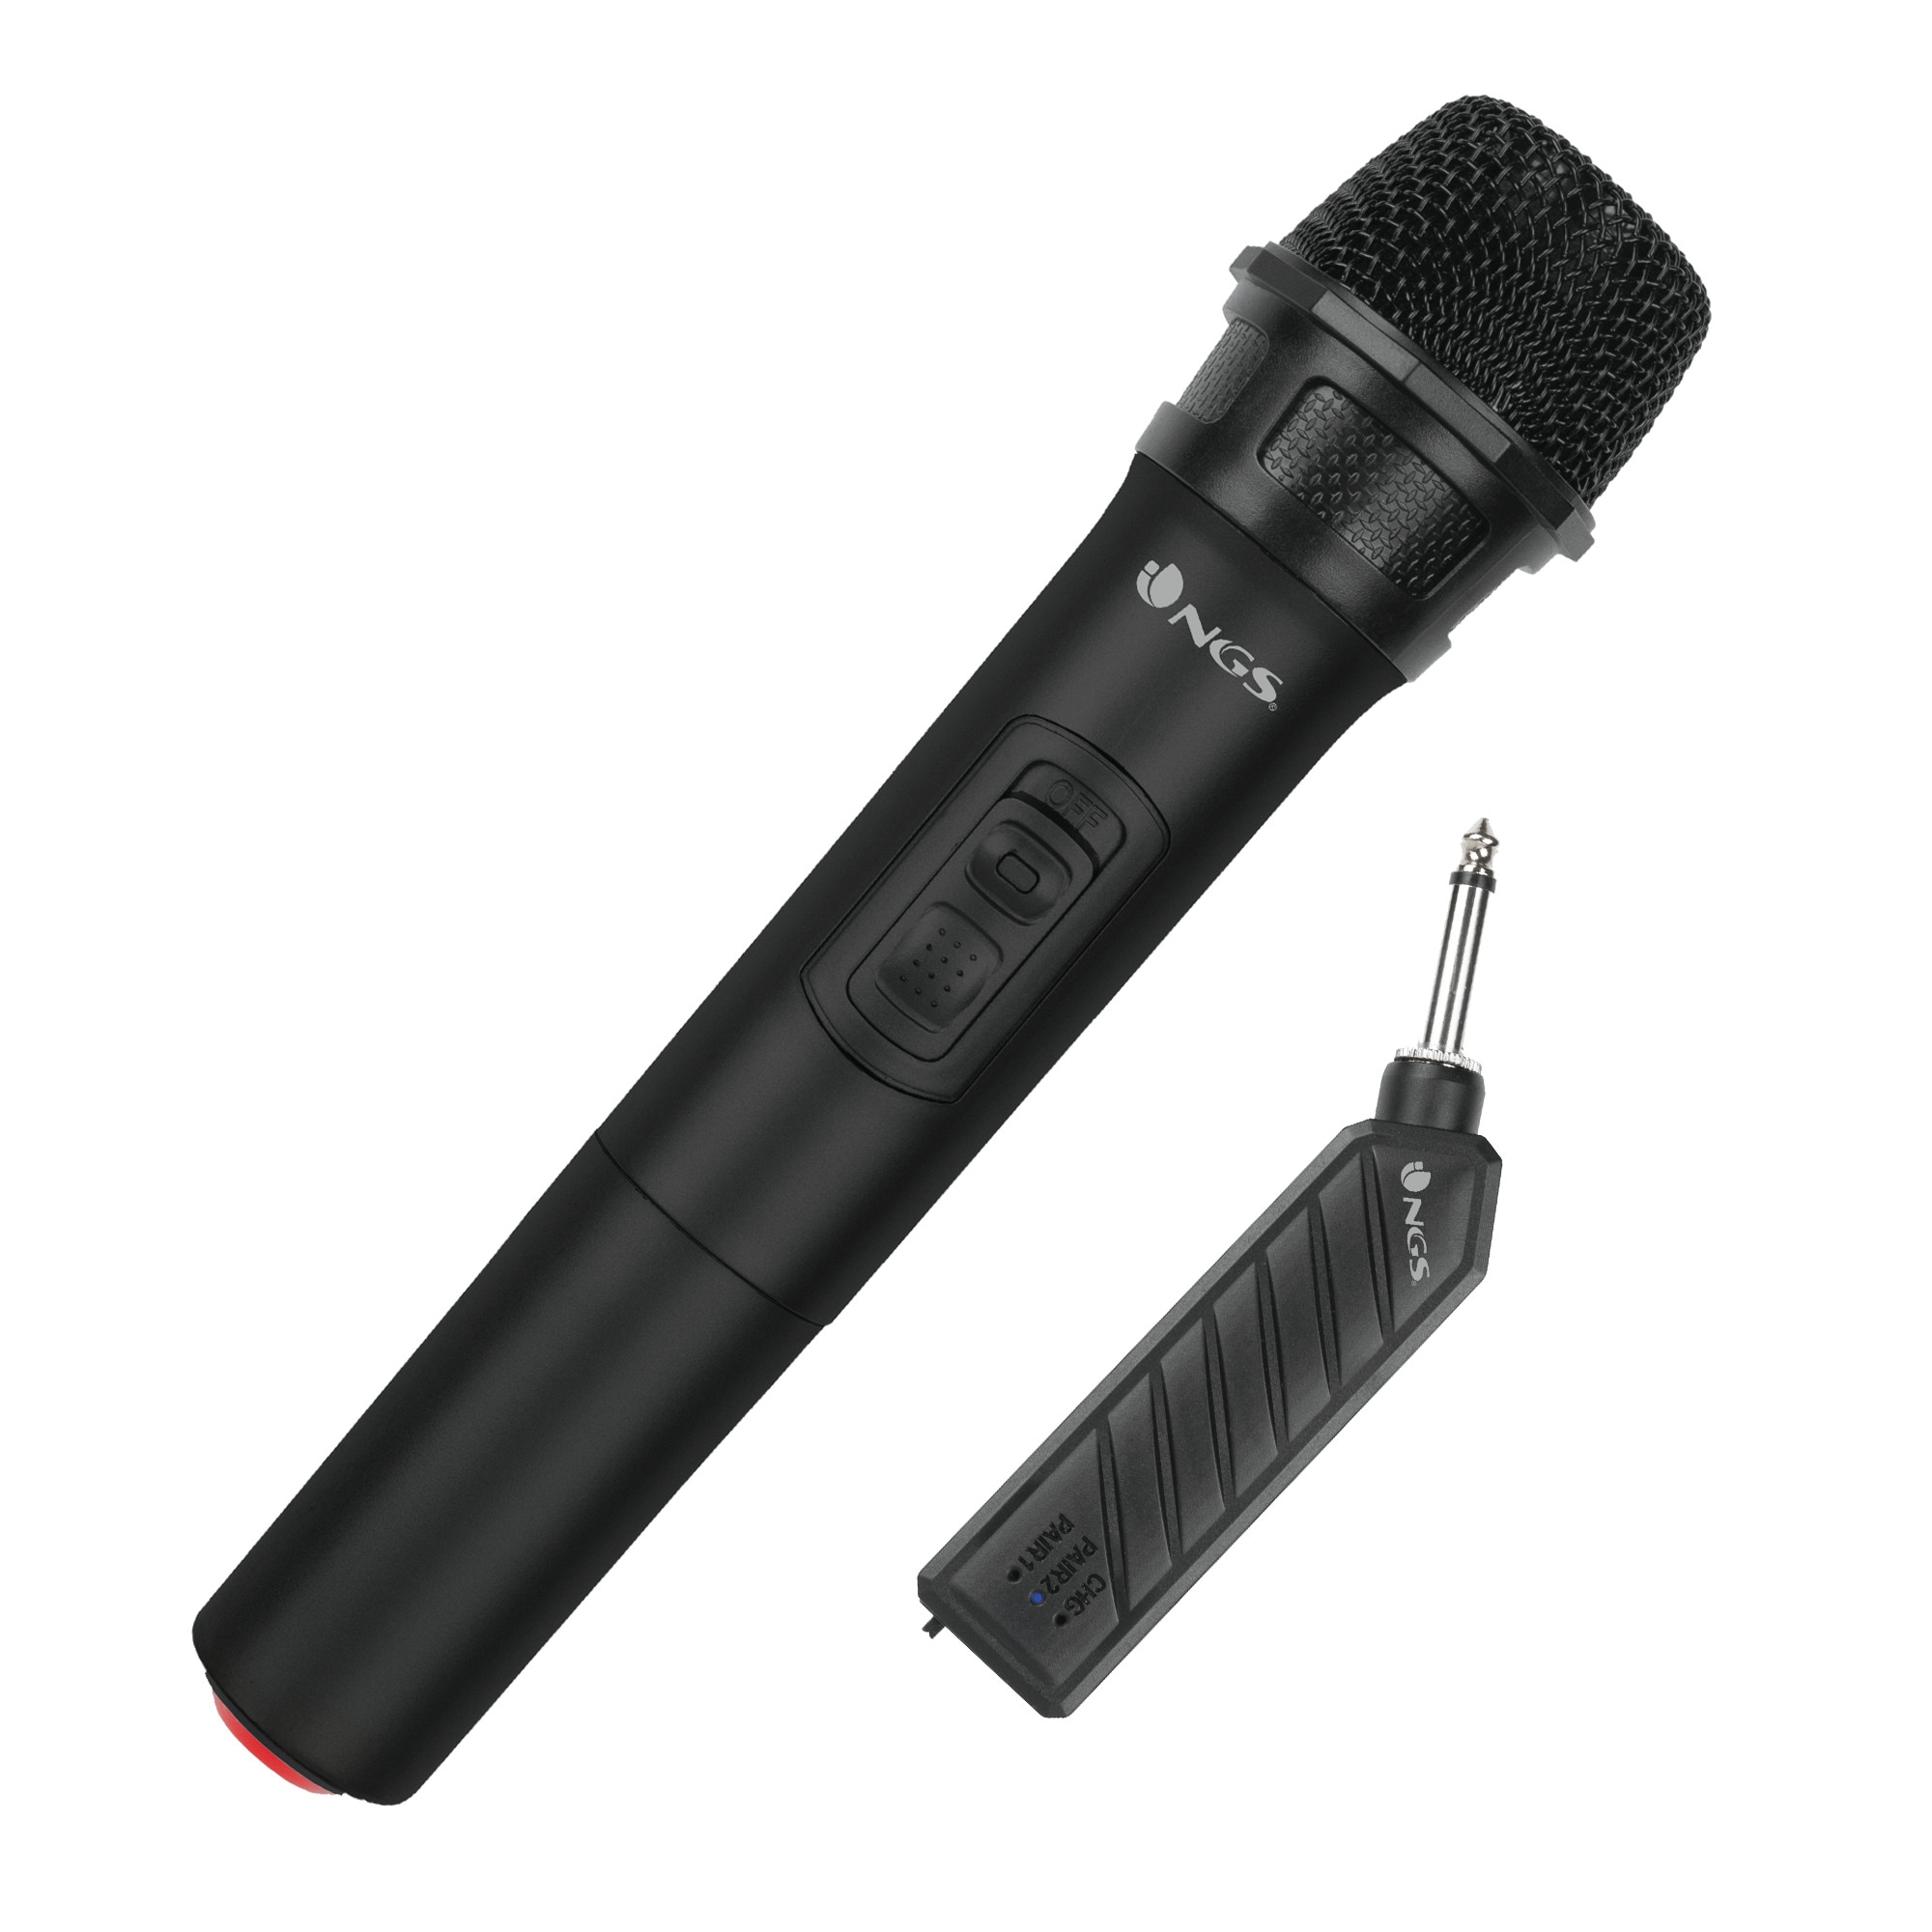 Trådlös mikrofon, 6,3mm kontakt, SINGERAIR - Elgiganten